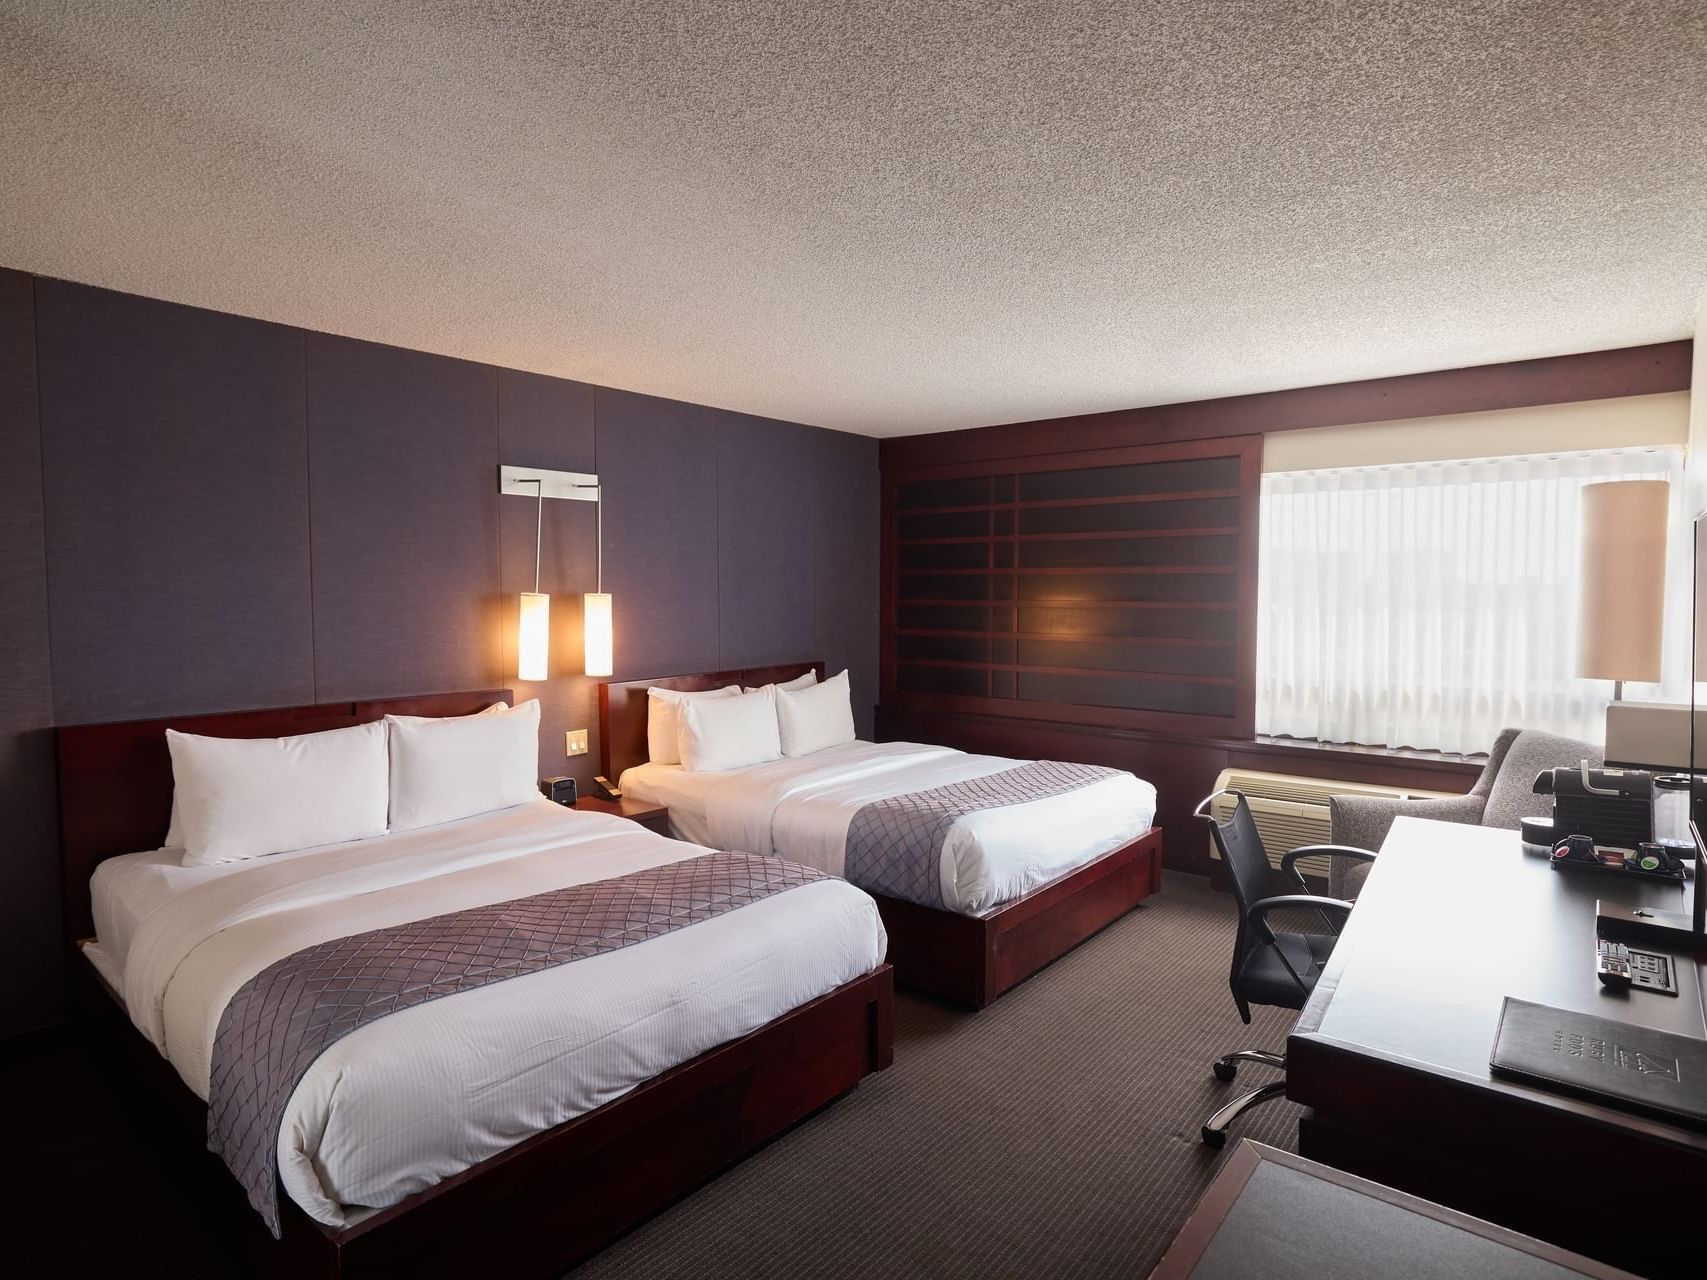 Beds & working area in Deluxe 2-Queen Room at Ruby Foo's Hotel